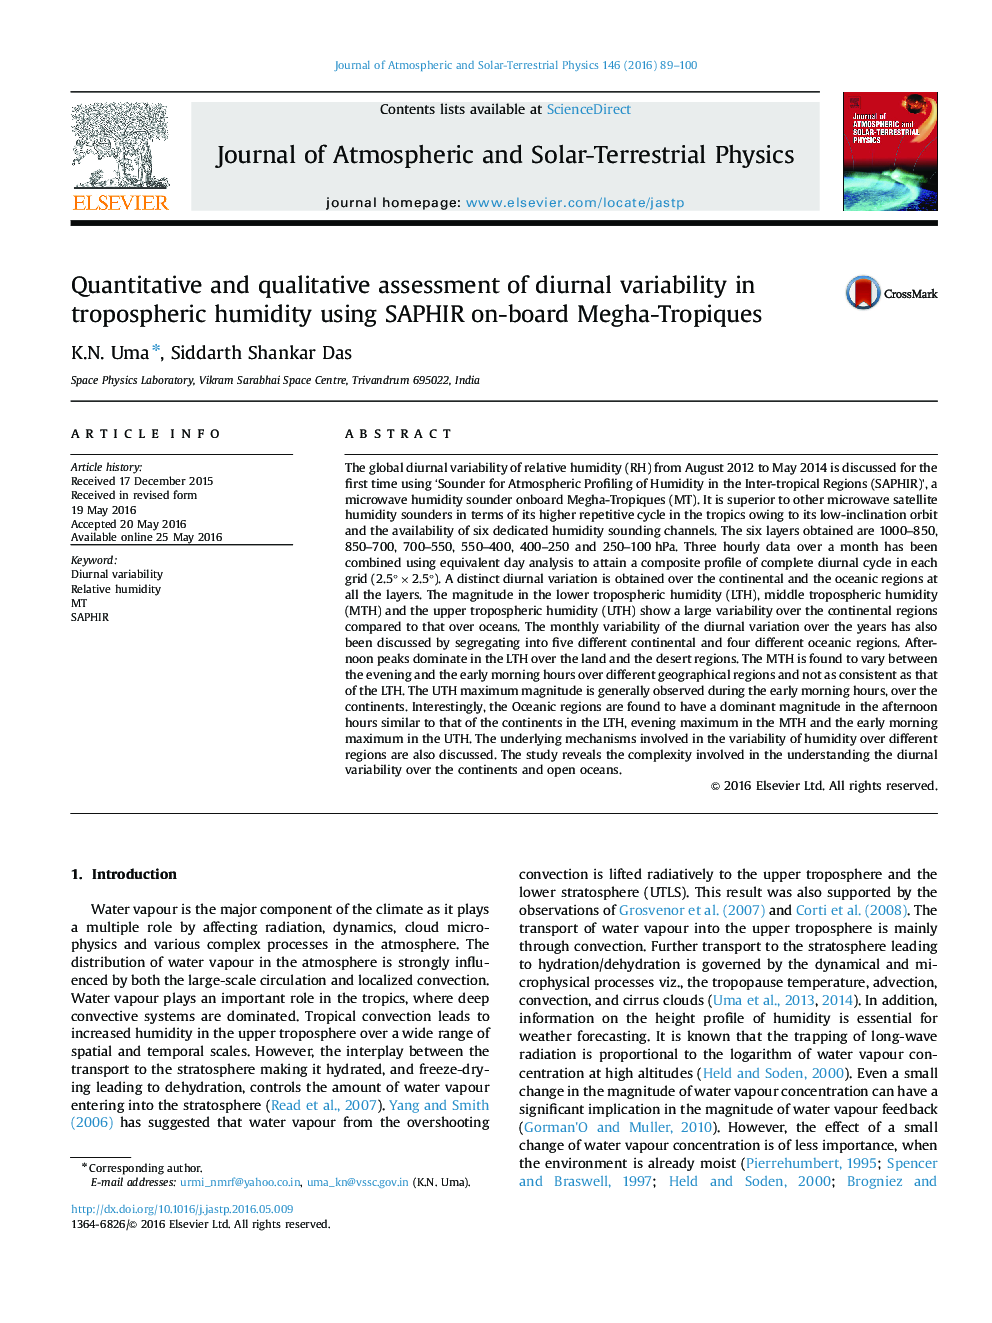 Quantitative and qualitative assessment of diurnal variability in tropospheric humidity using SAPHIR on-board Megha-Tropiques